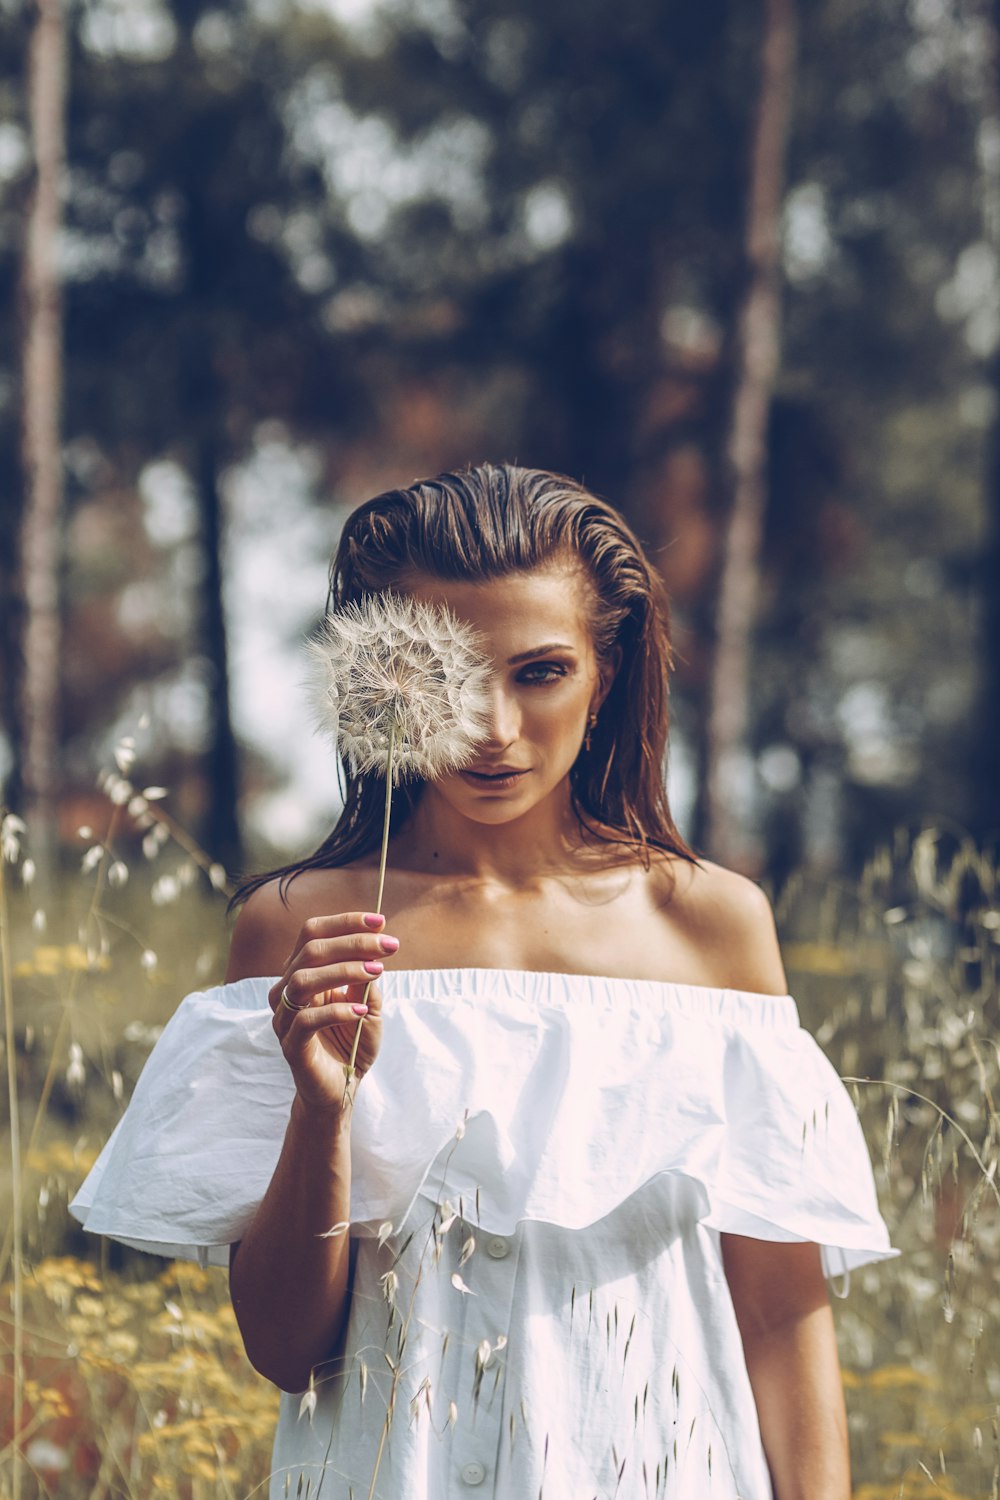 woman in white off shoulder dress holding dandelion flower